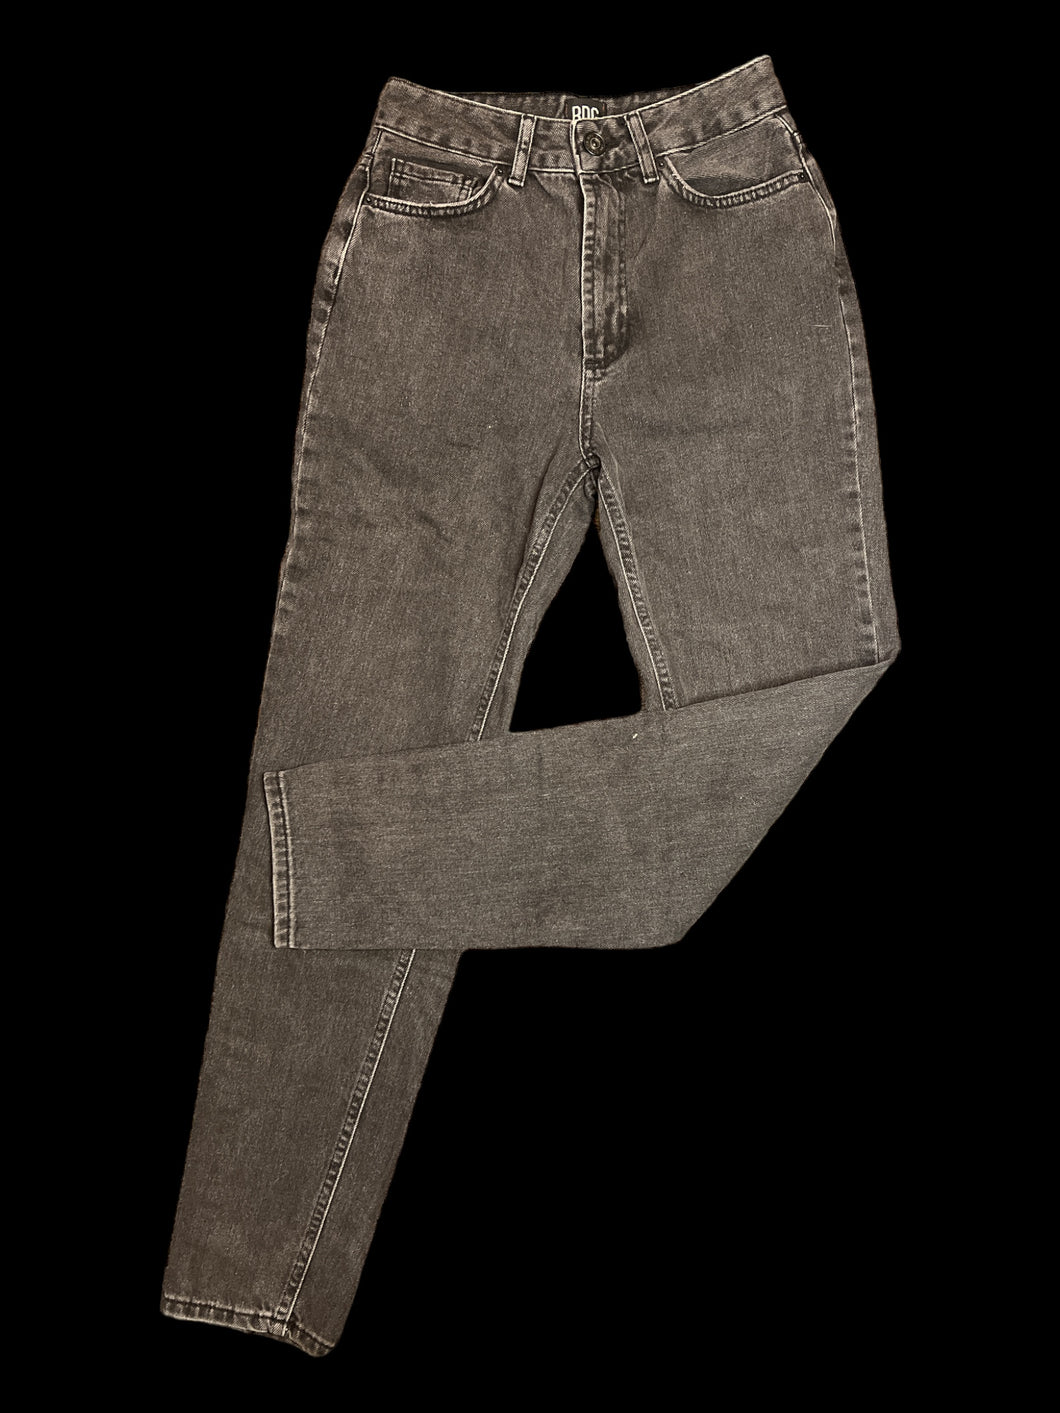 S Black denim high waist taper leg pants w/ pockets, belt loops, & button/zipper closure